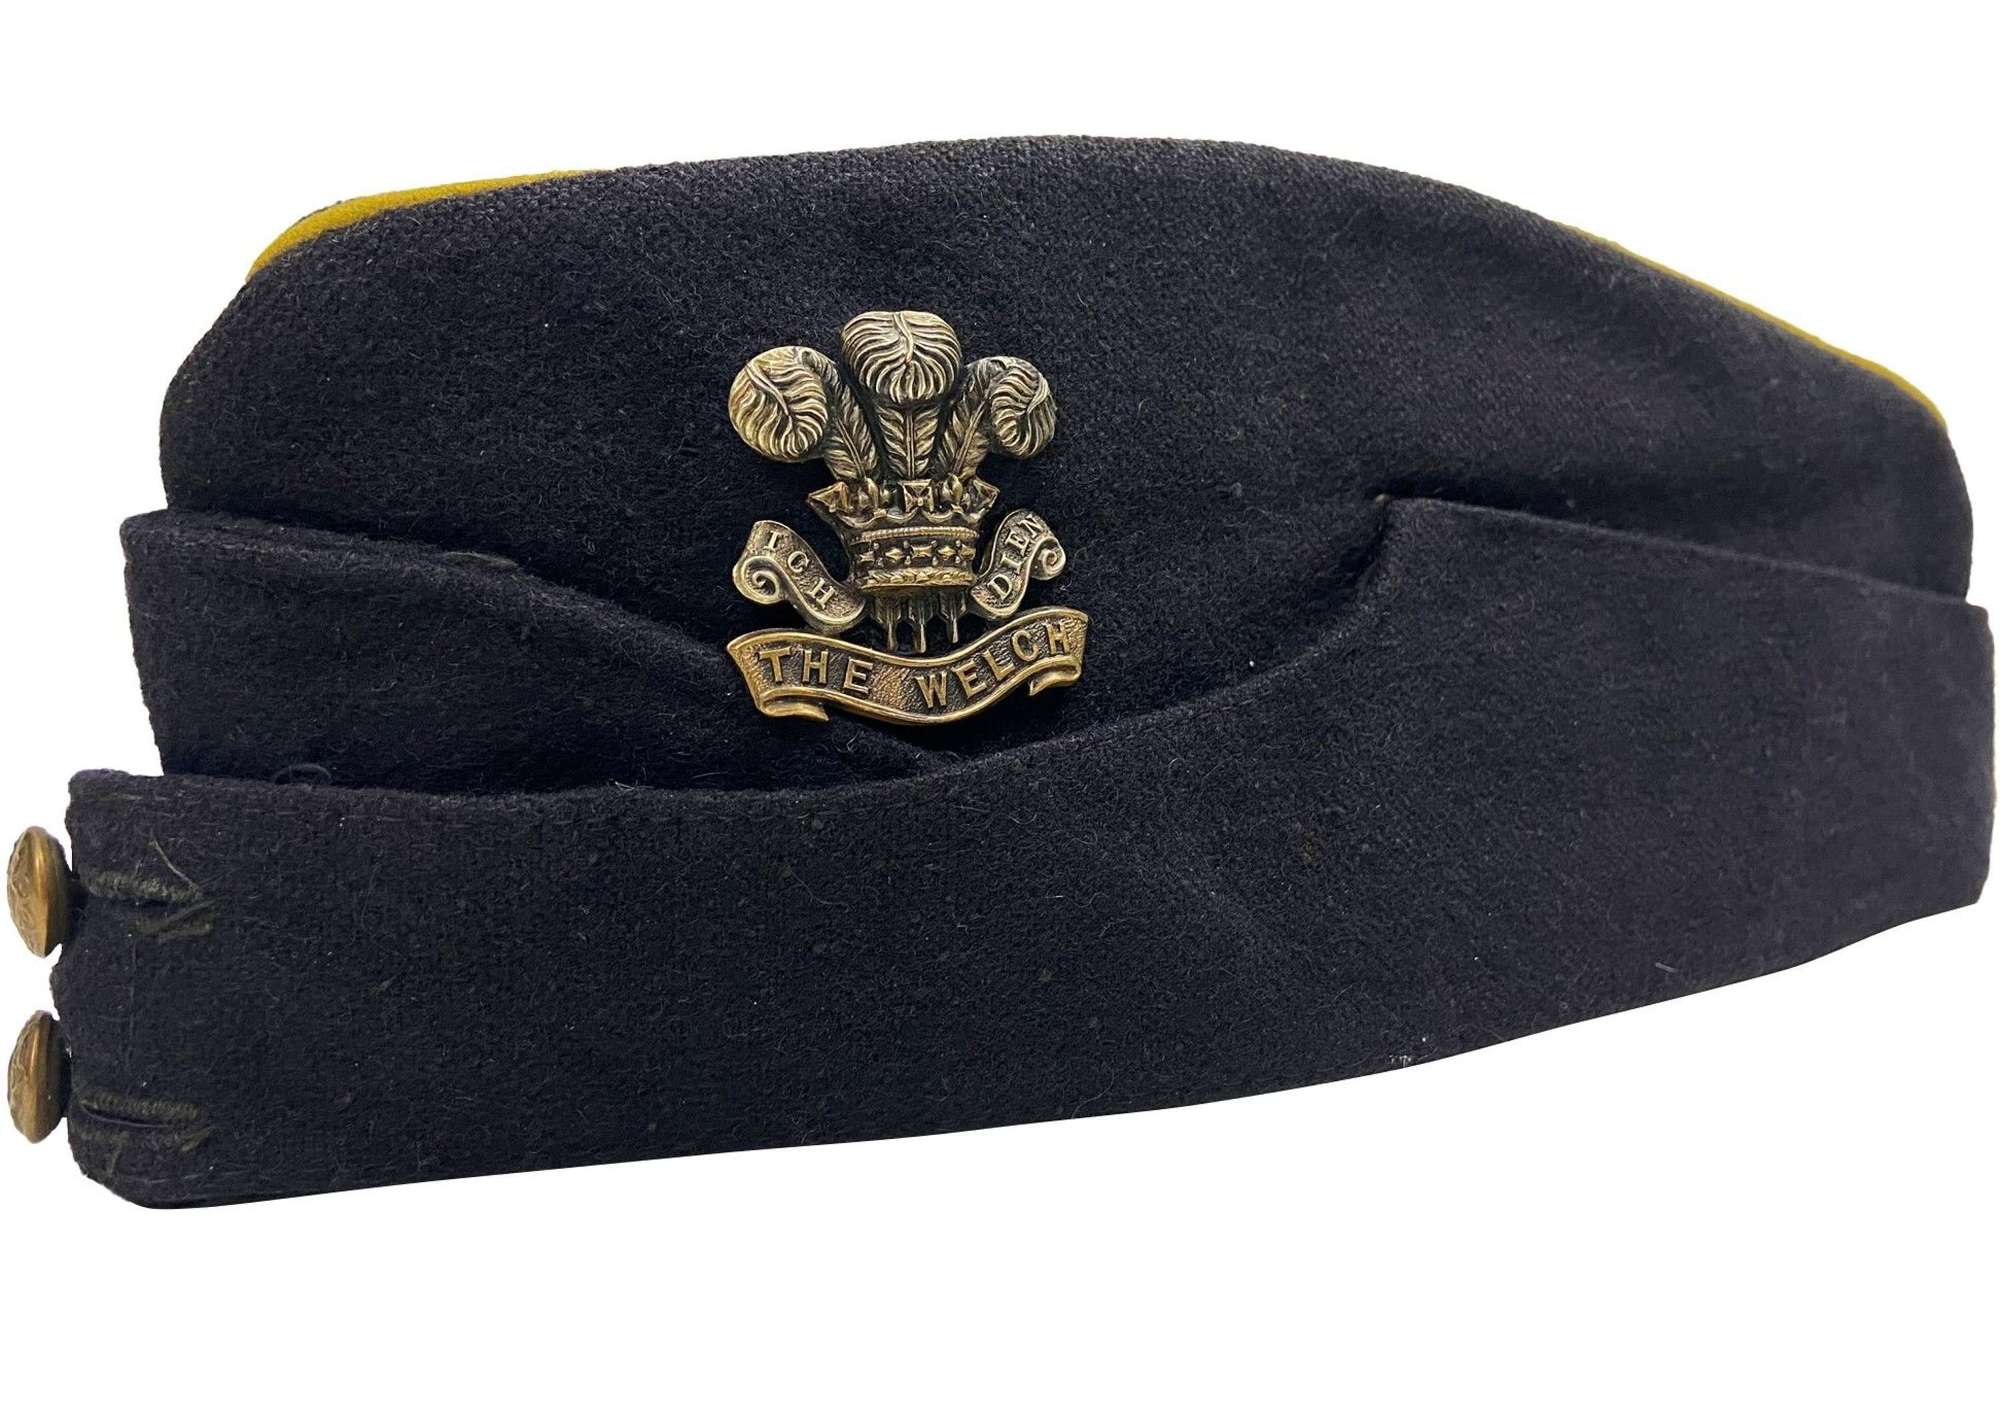 Original Welch Regiment Coloured Field Service Forage Cap